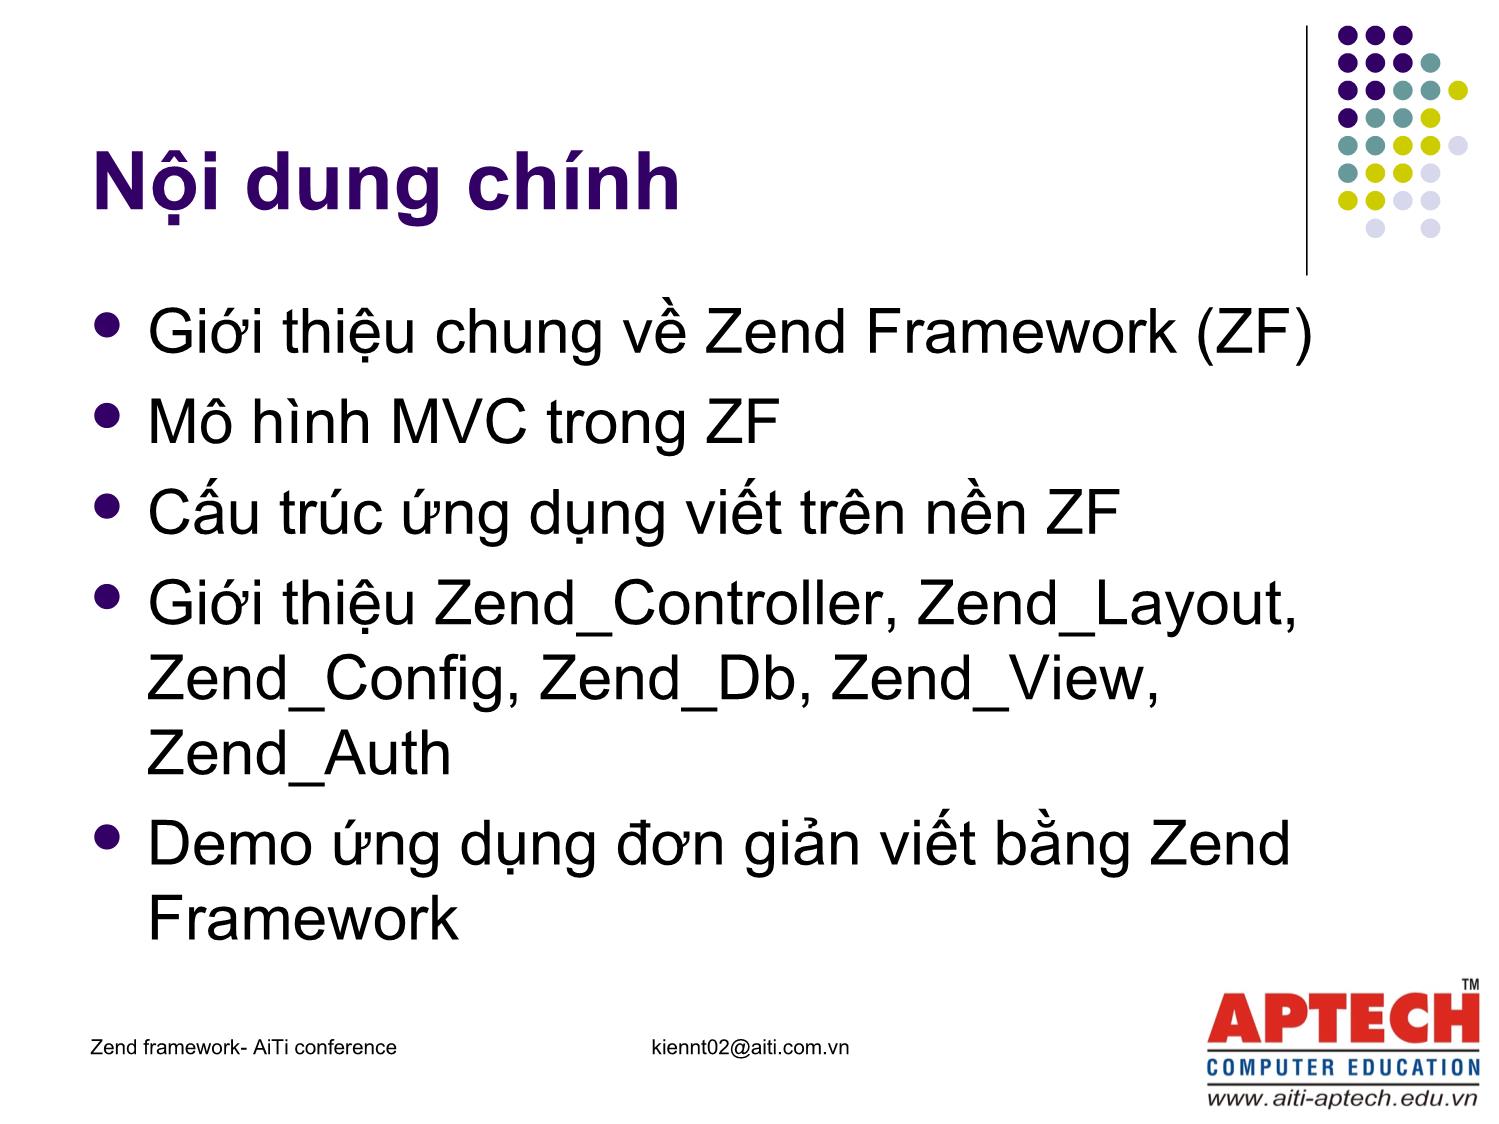 Bài giảng Zend Framework trang 2